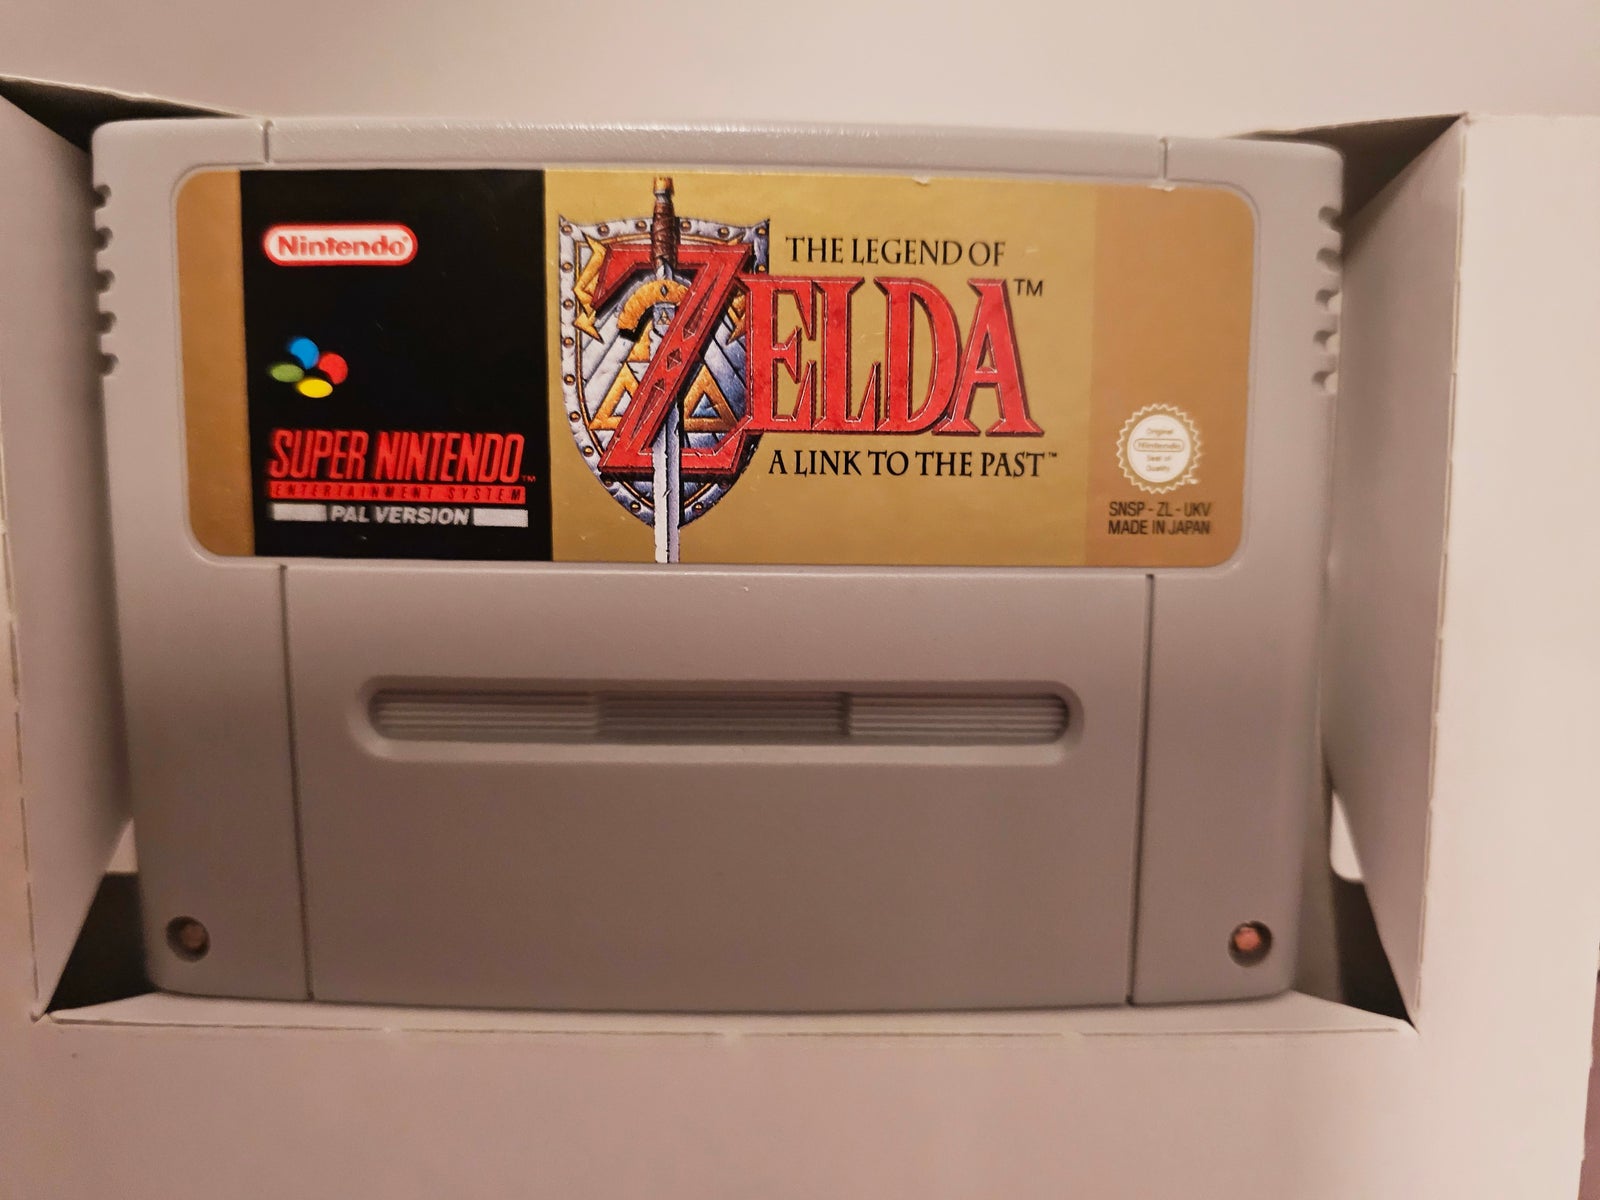 The Legend of Zelda A Link to the Past, Super Nintendo